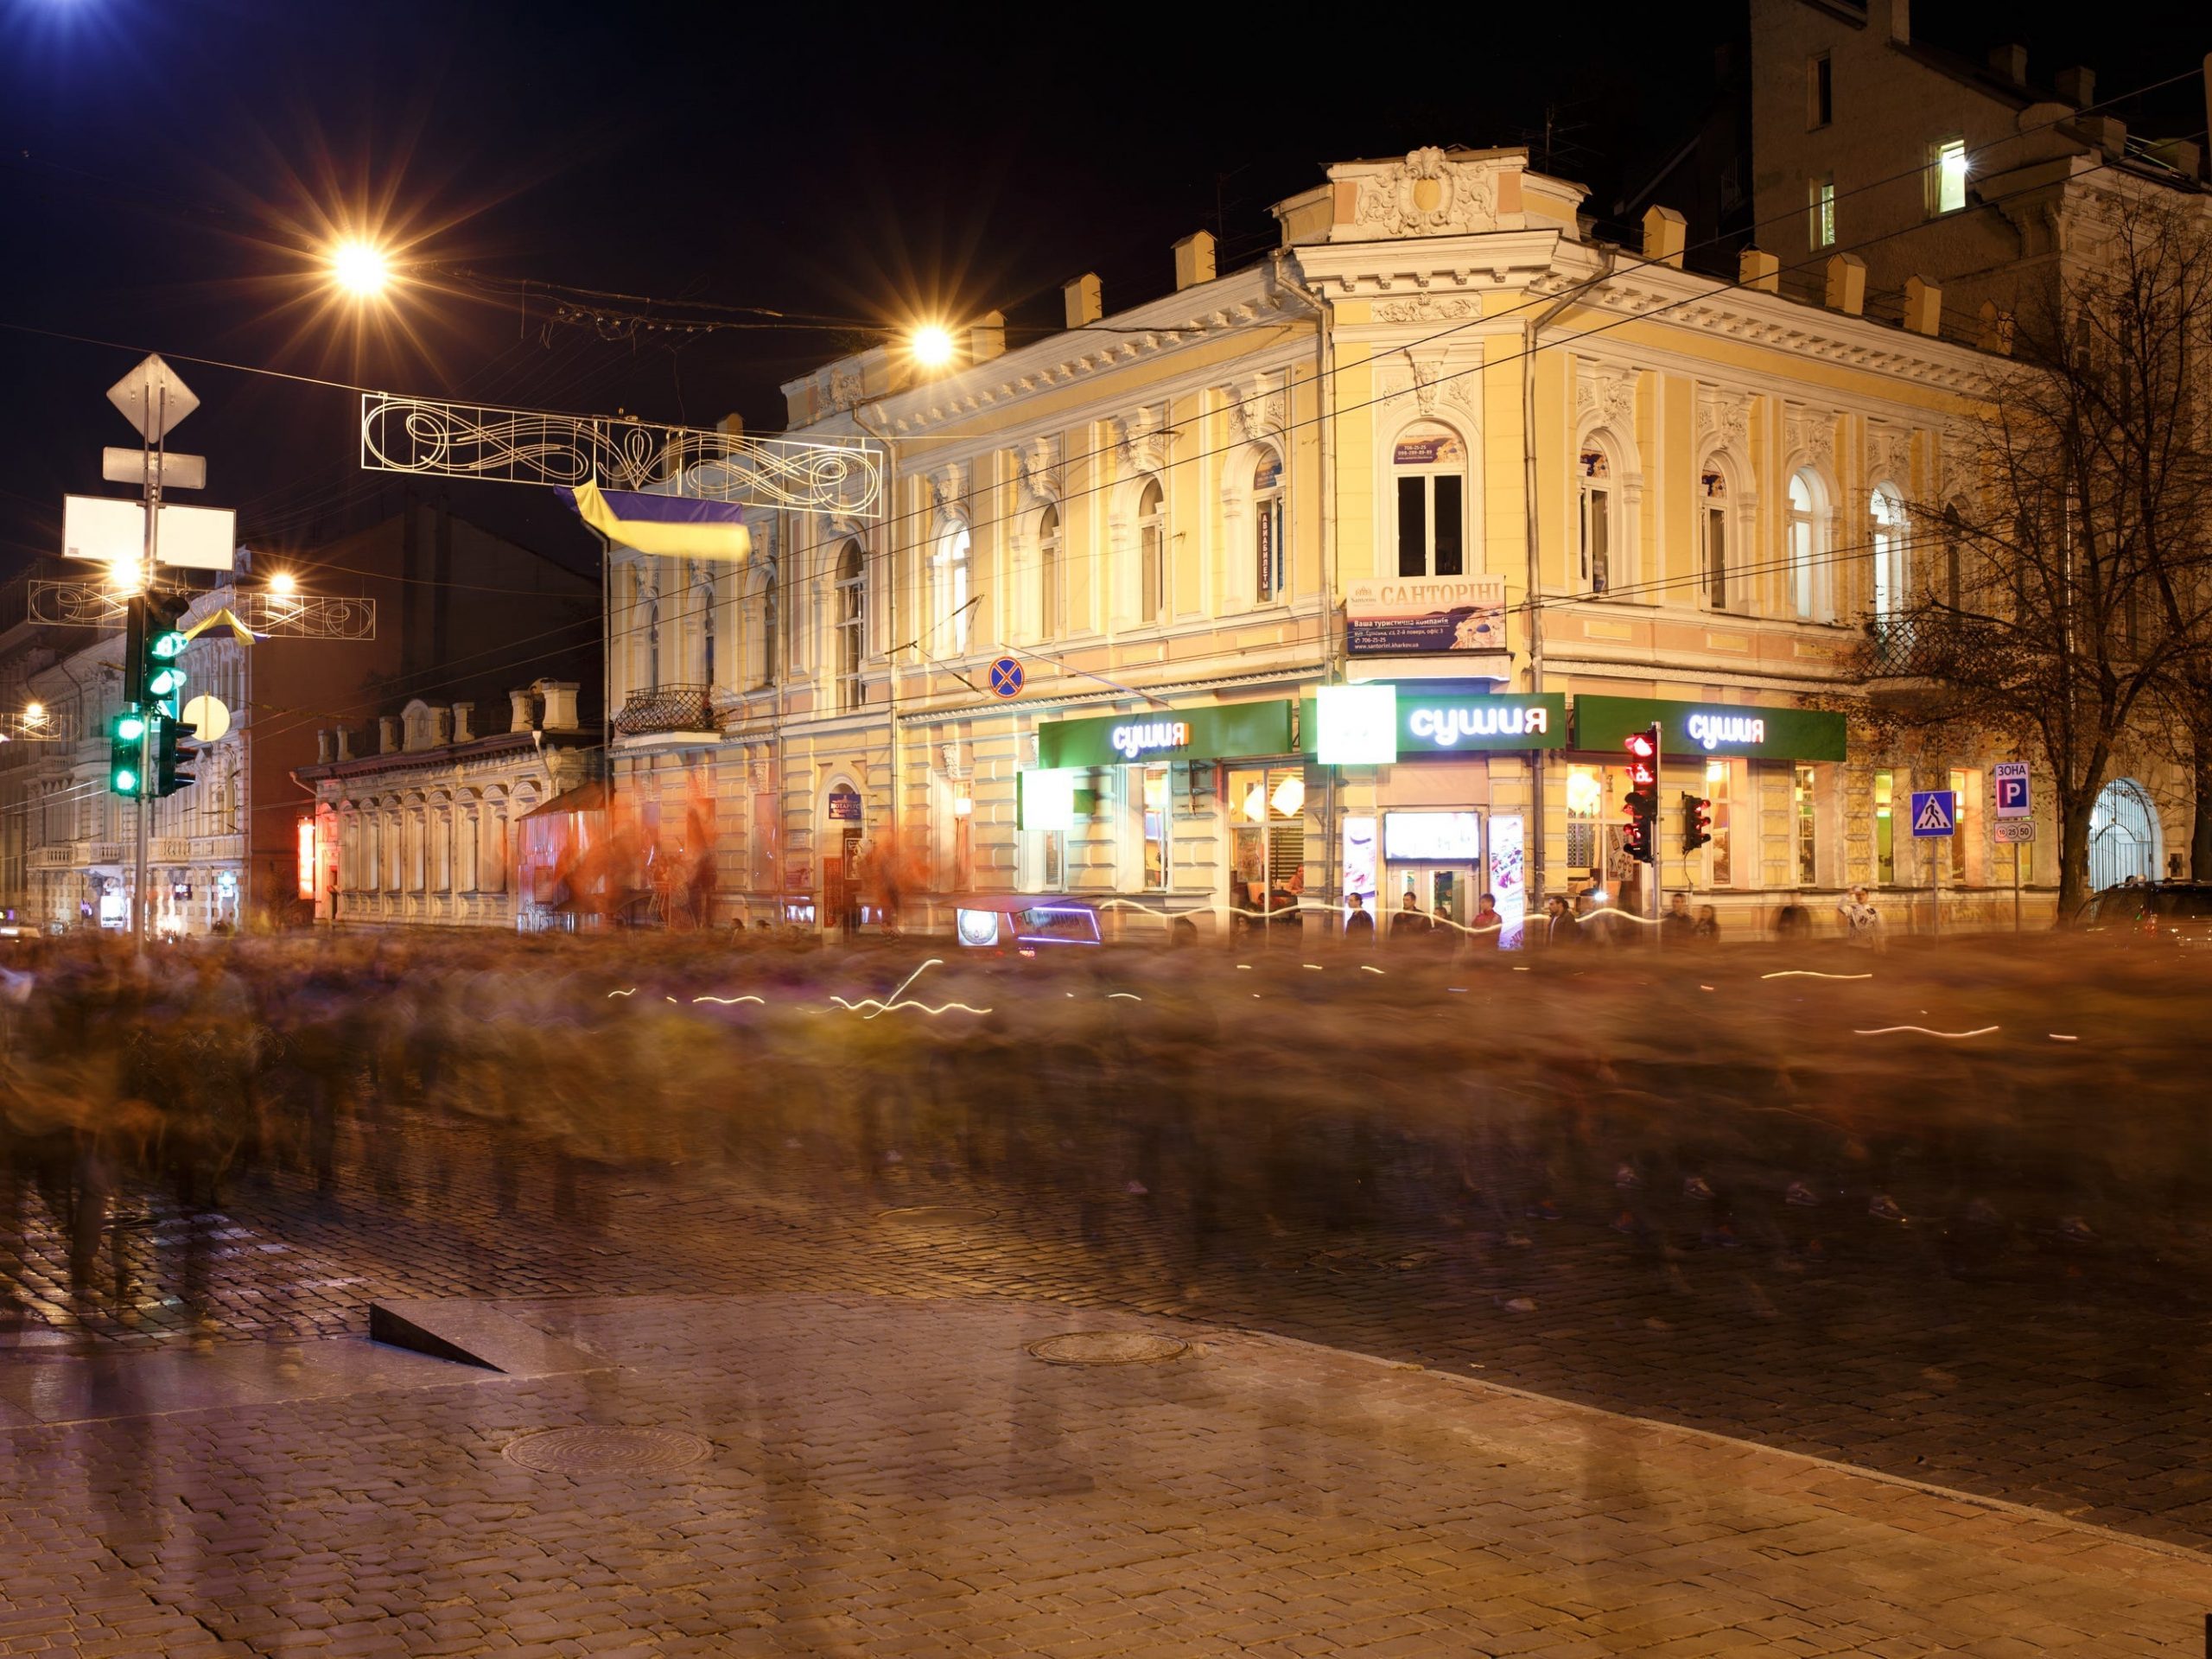 Sumskaya street in Kharkiv, Ukraine on October 14, 2014.